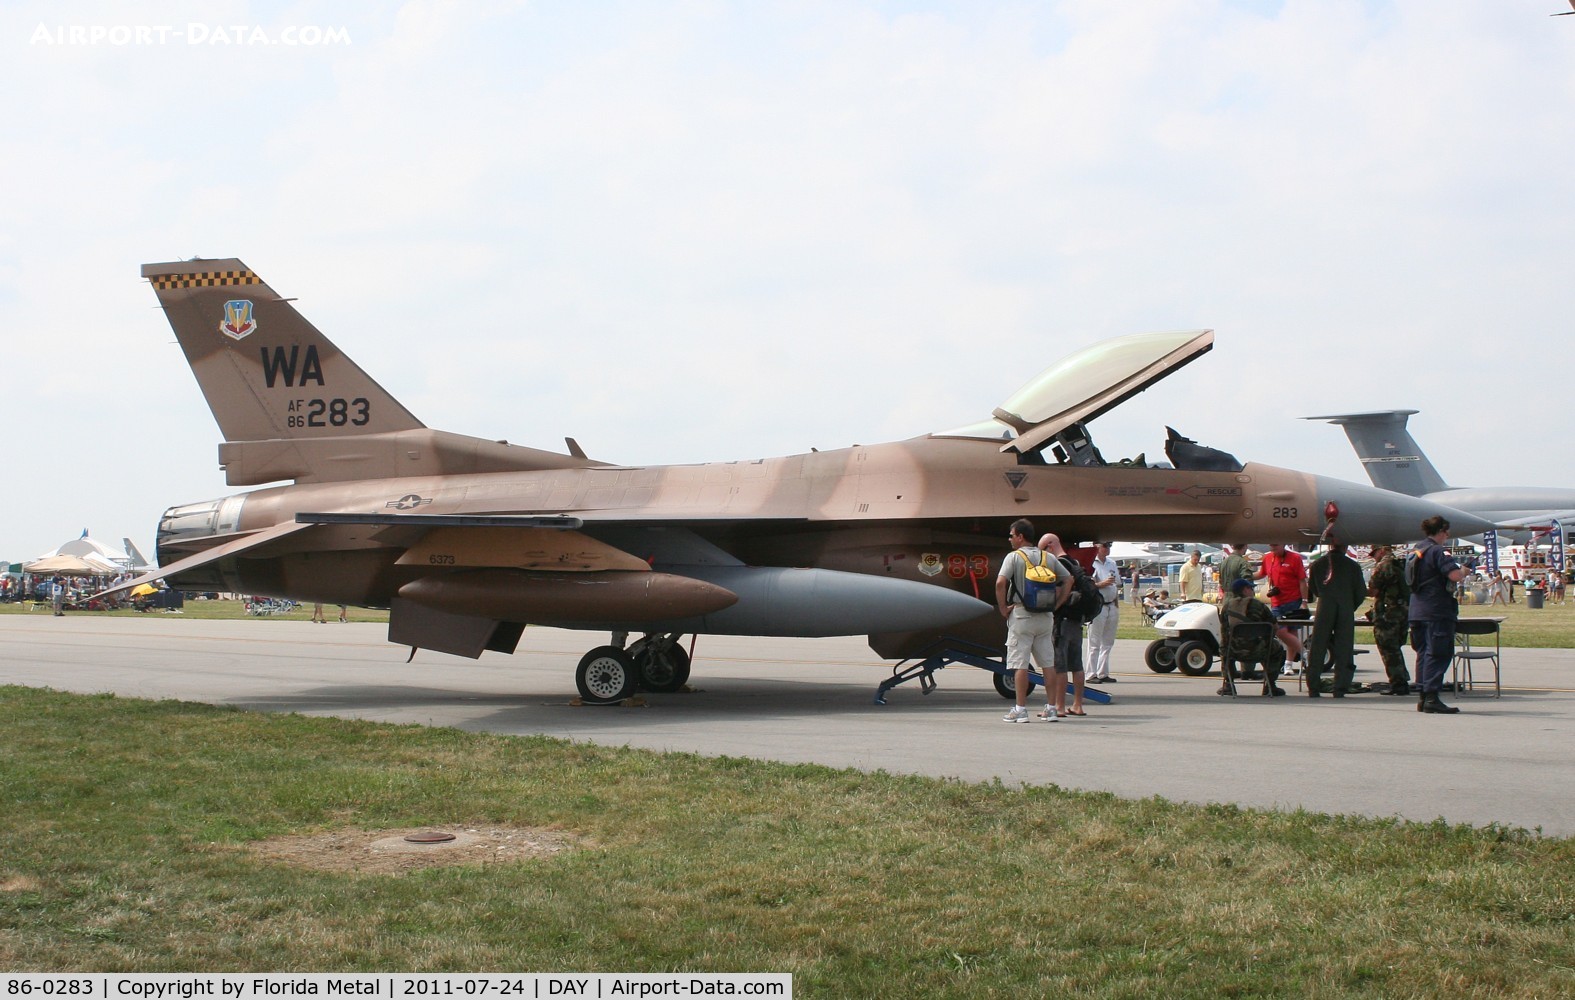 86-0283, 1986 General Dynamics F-16C Fighting Falcon C/N 5C-389, F-16 in aggressor colors